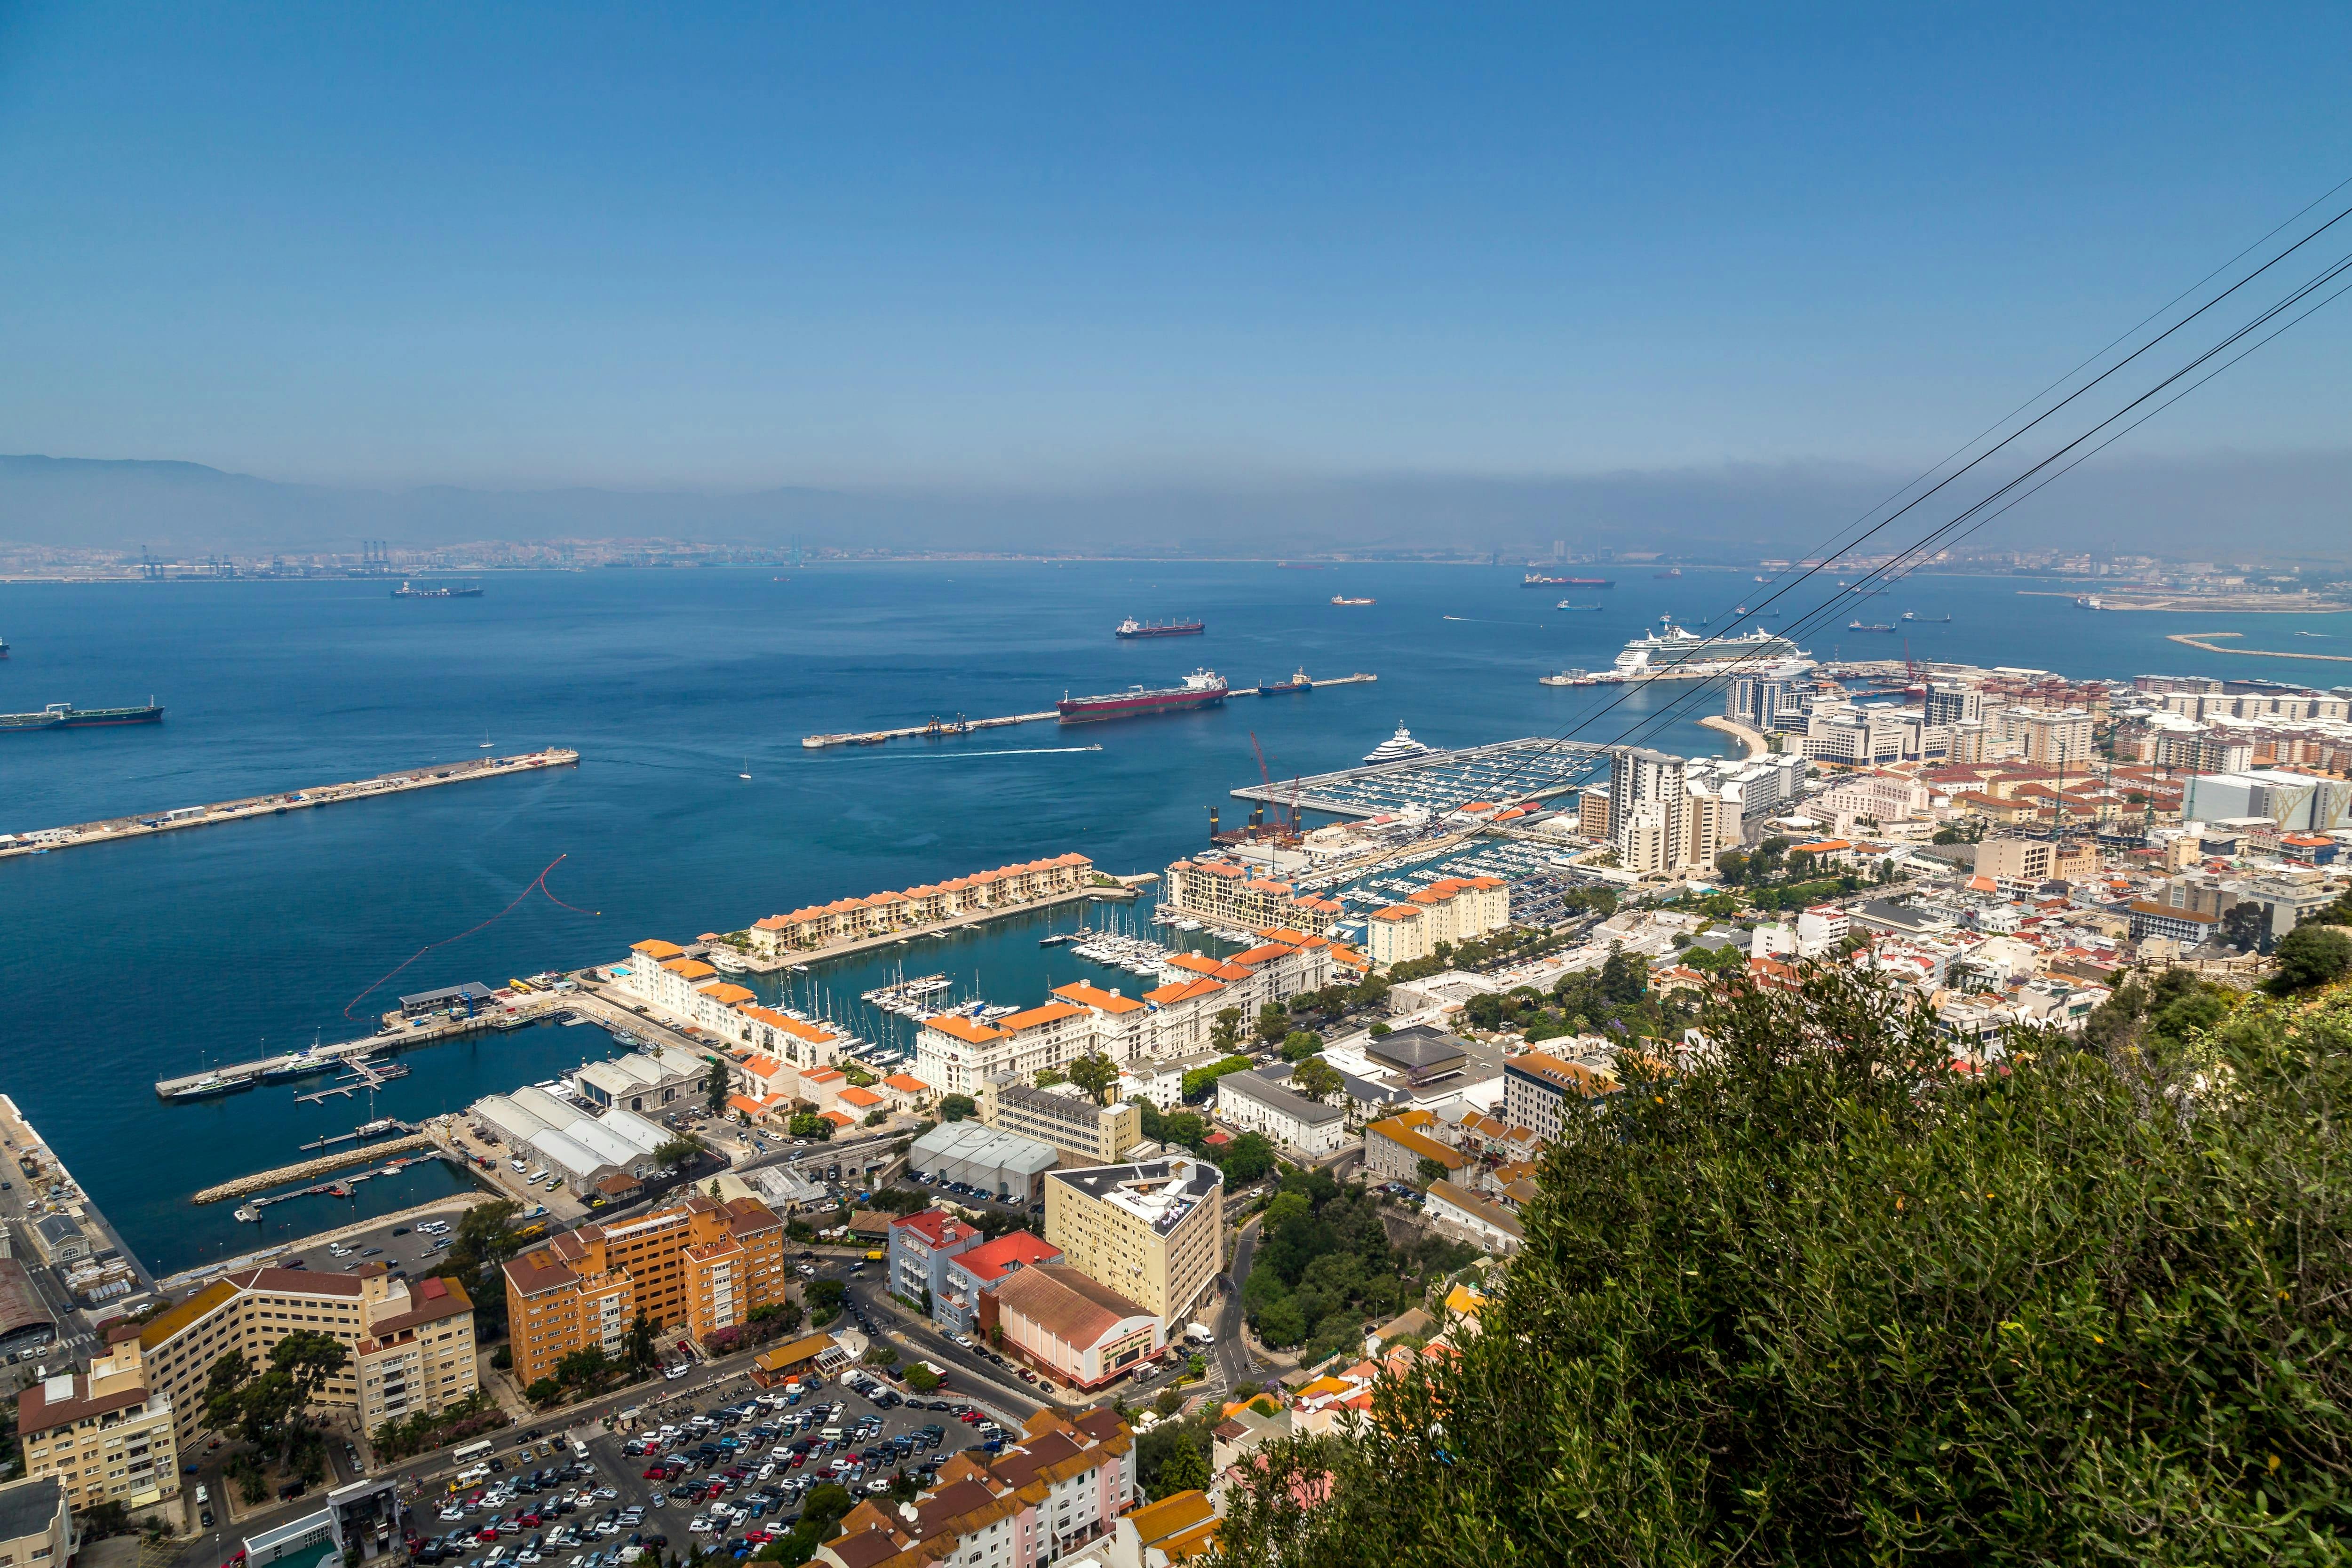 Full Day Gibraltar Tour from Costa de la Luz